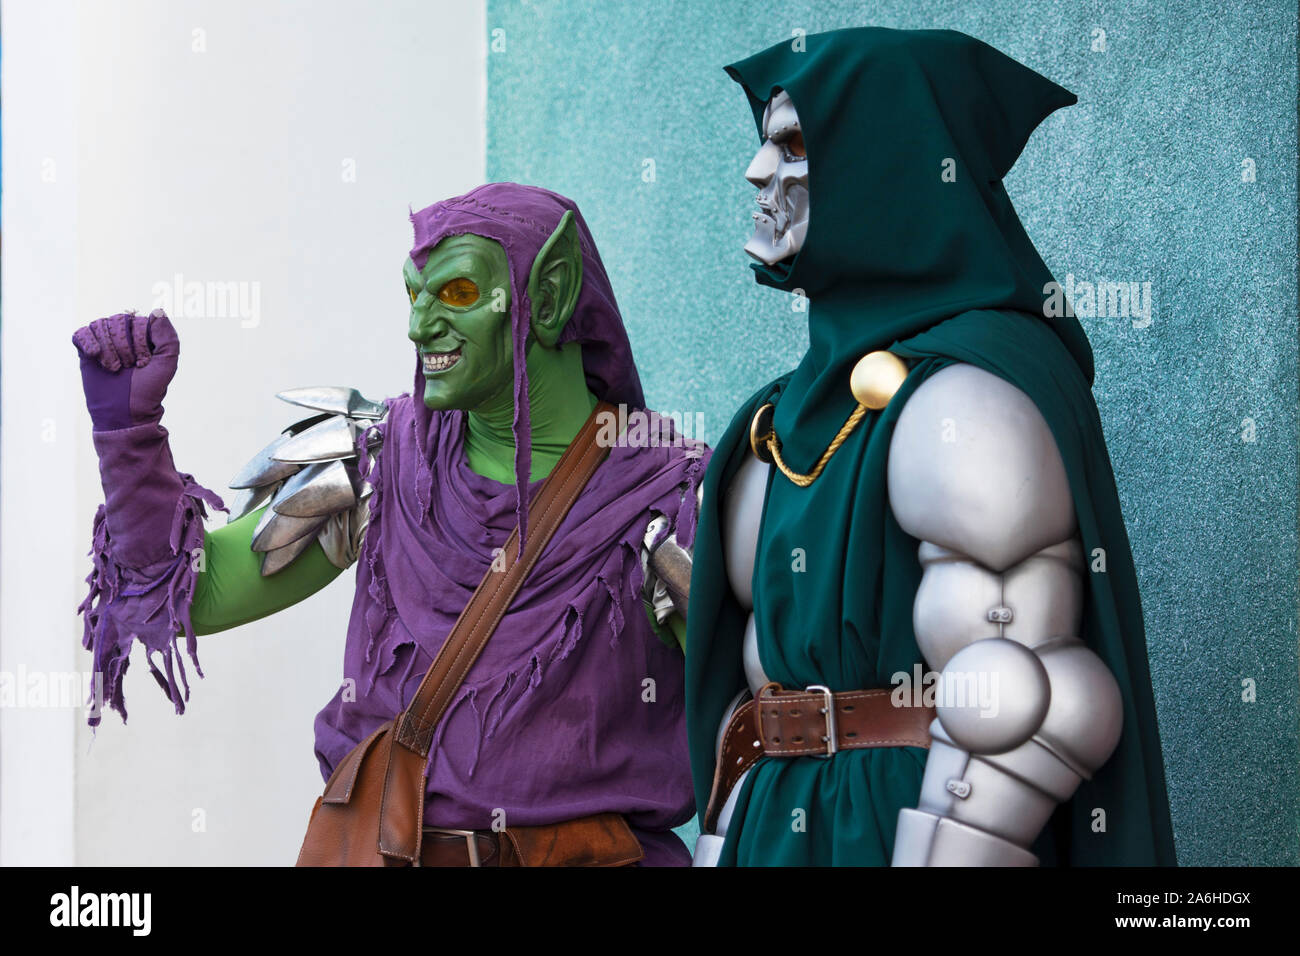 Doctor Doom and Green Goblin, Marvel Supervillain, Villains Characters, Super Hero Island, Islands of Adventure, Universal Studios Resort, Orlando Stock Photo